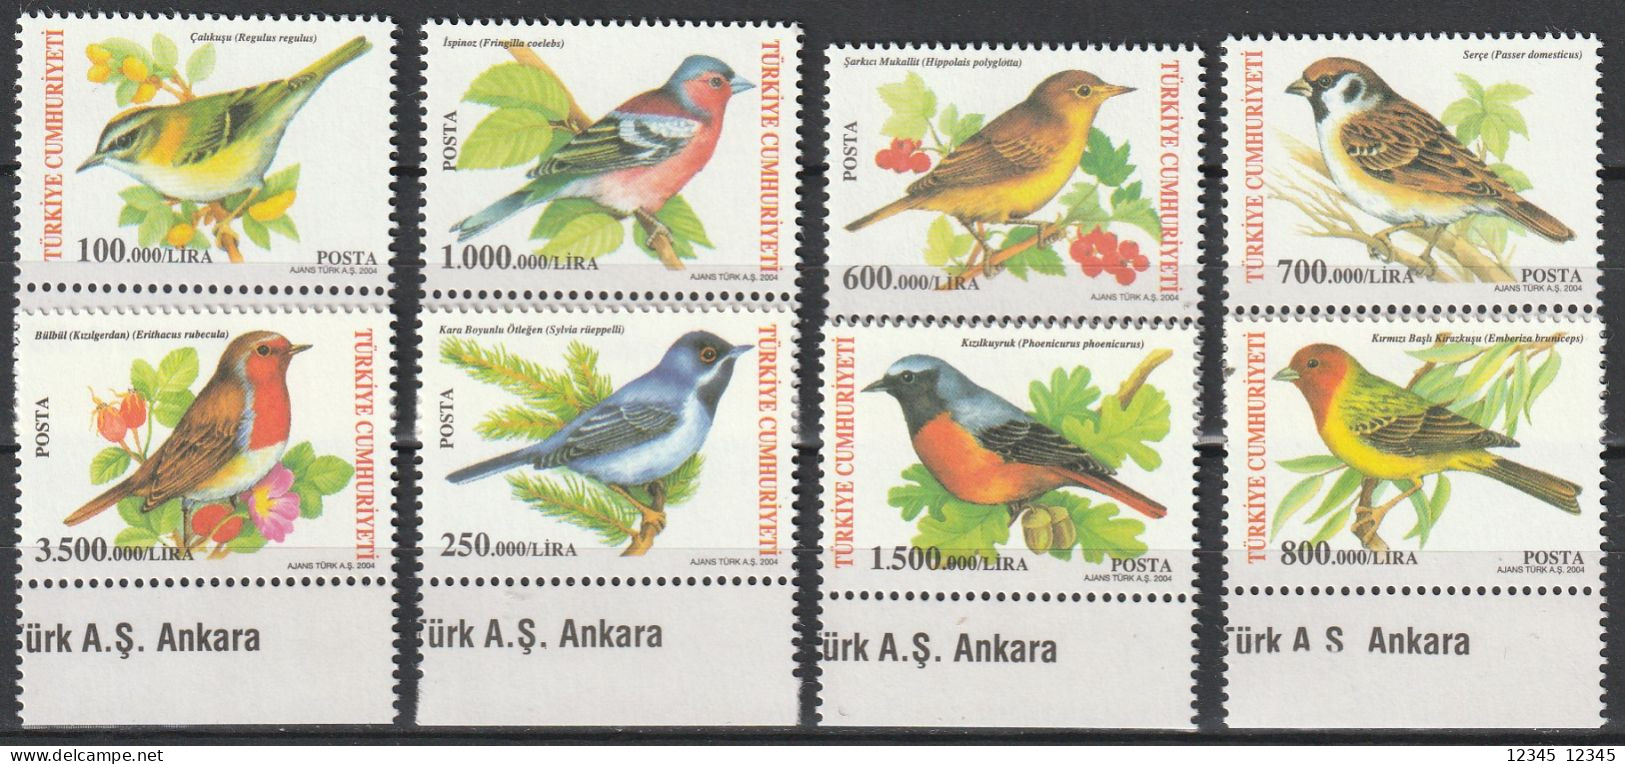 Turkije 2004, Postfris MNH, Birds - Unused Stamps